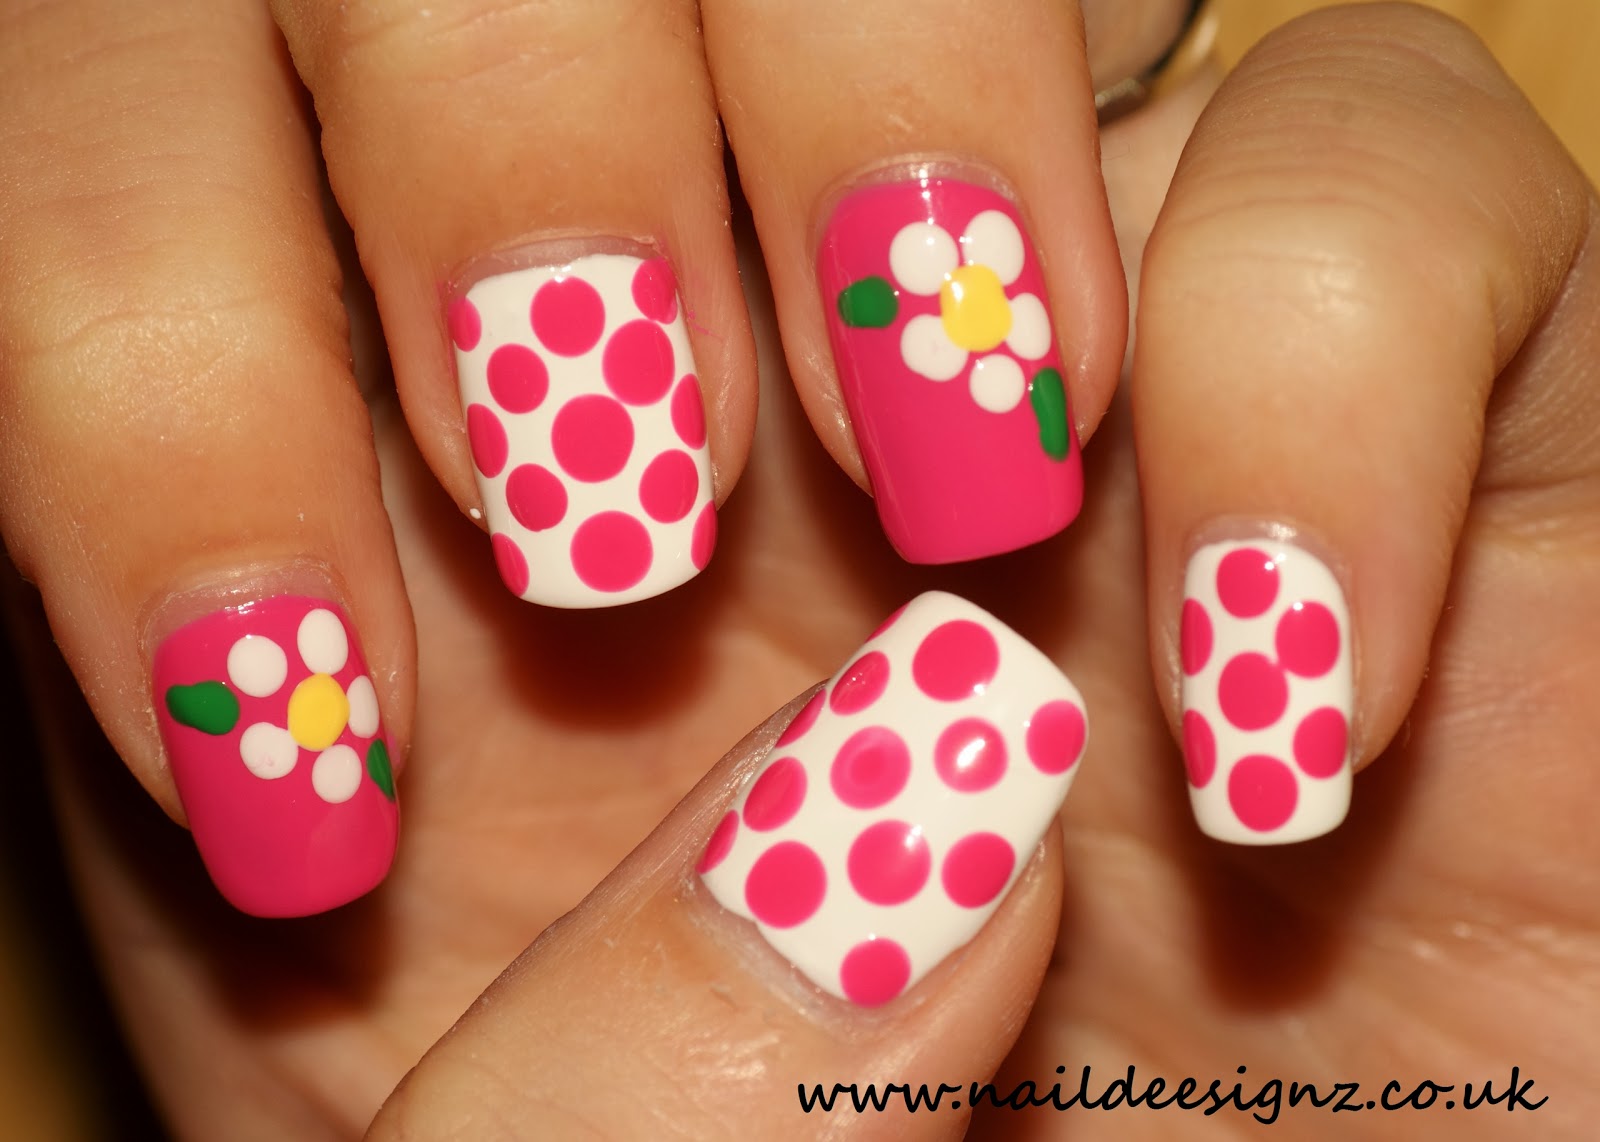 9. Spring Polka Dot Nail Art Designs on Pinterest - wide 6